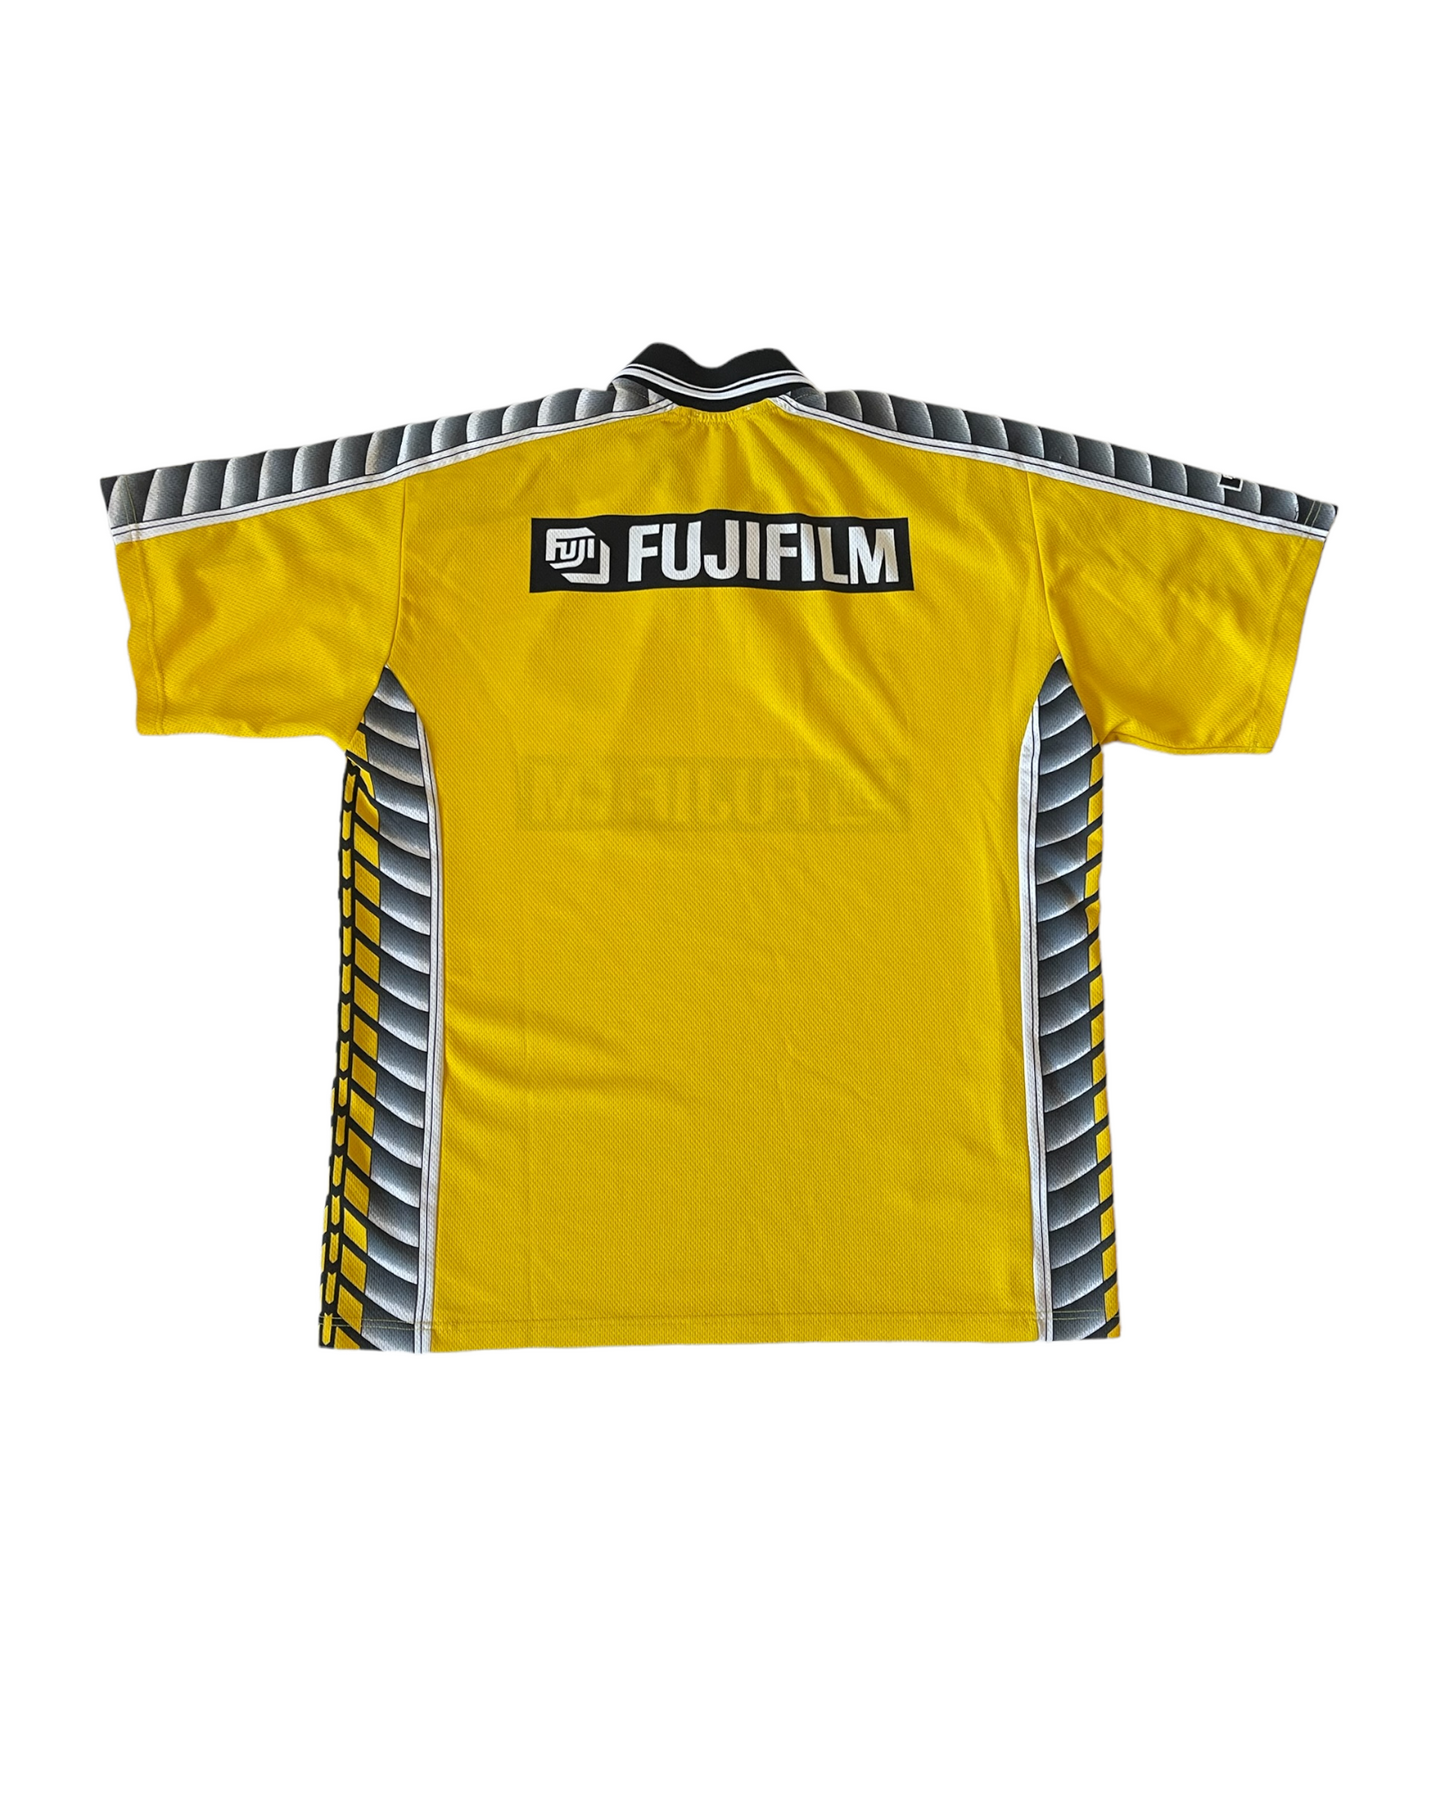 NAC Breda FILA 1998 - 1999 Home Football Shirt Size L Made in Italy Fujifilm Yellow Black